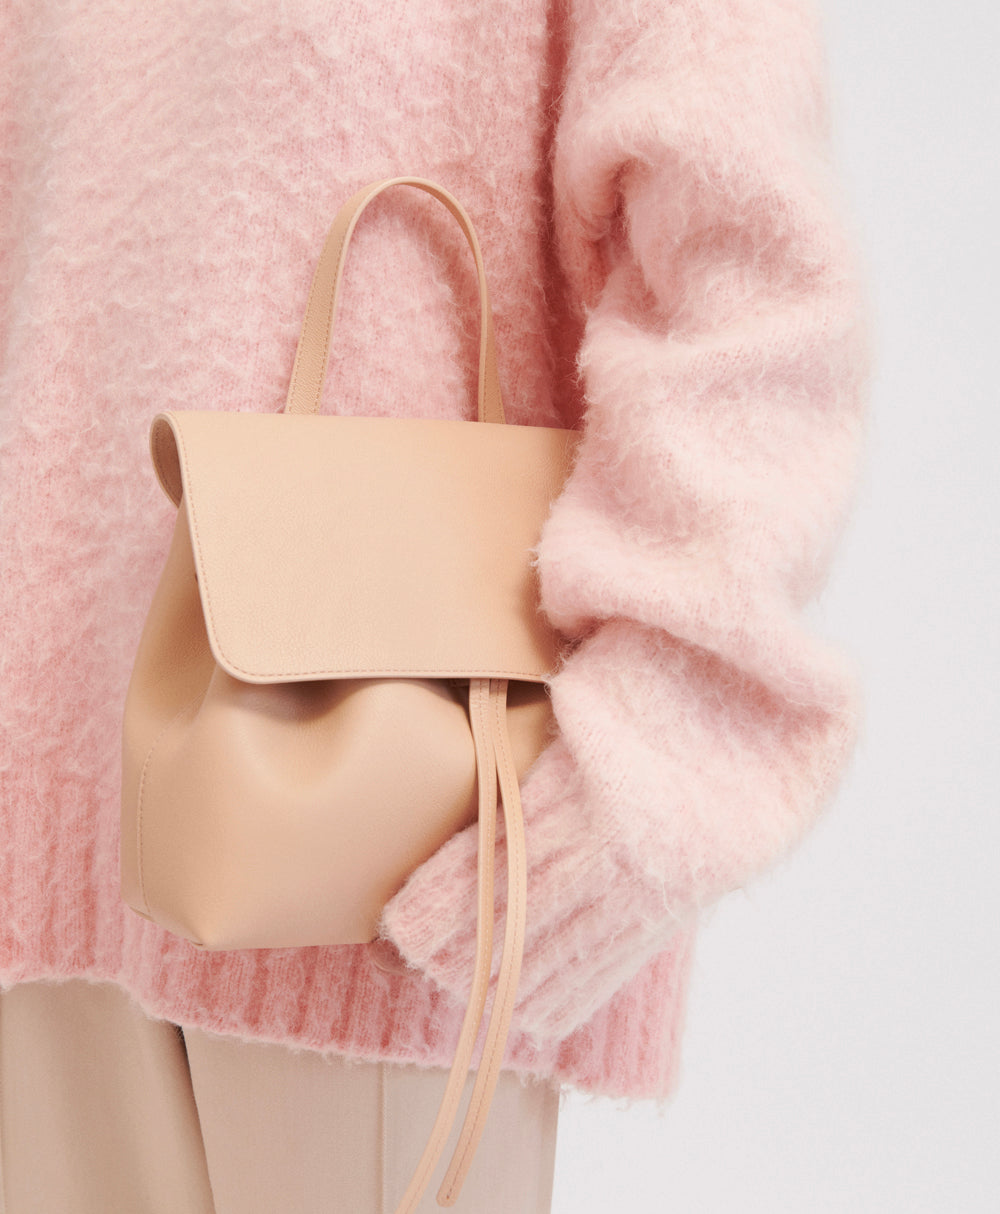 Dior Introduces New Handbag: the Lady 95.22 | Hypebae